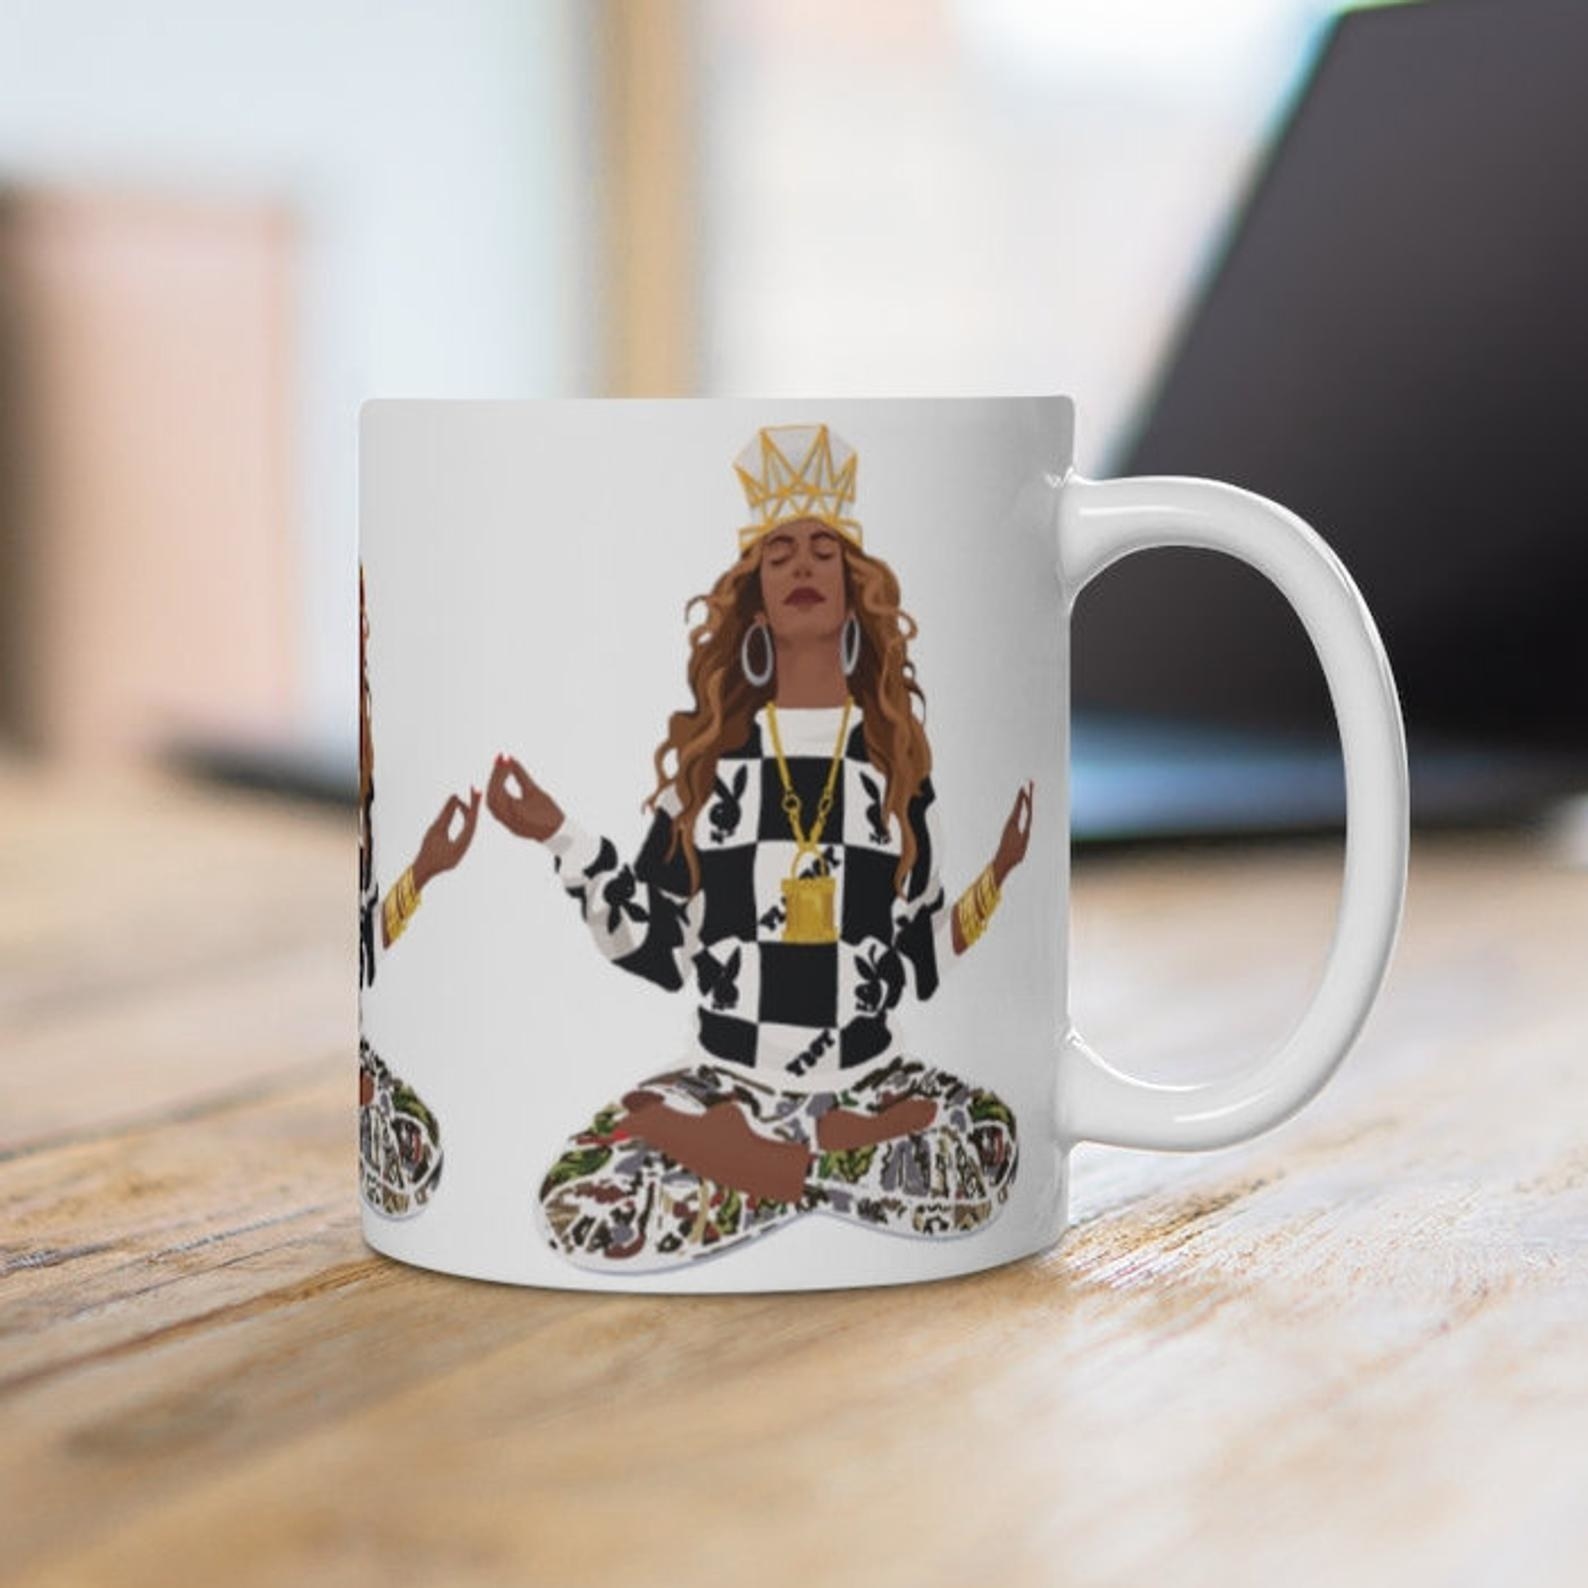 An illustration of Beyoncé on a white mug 